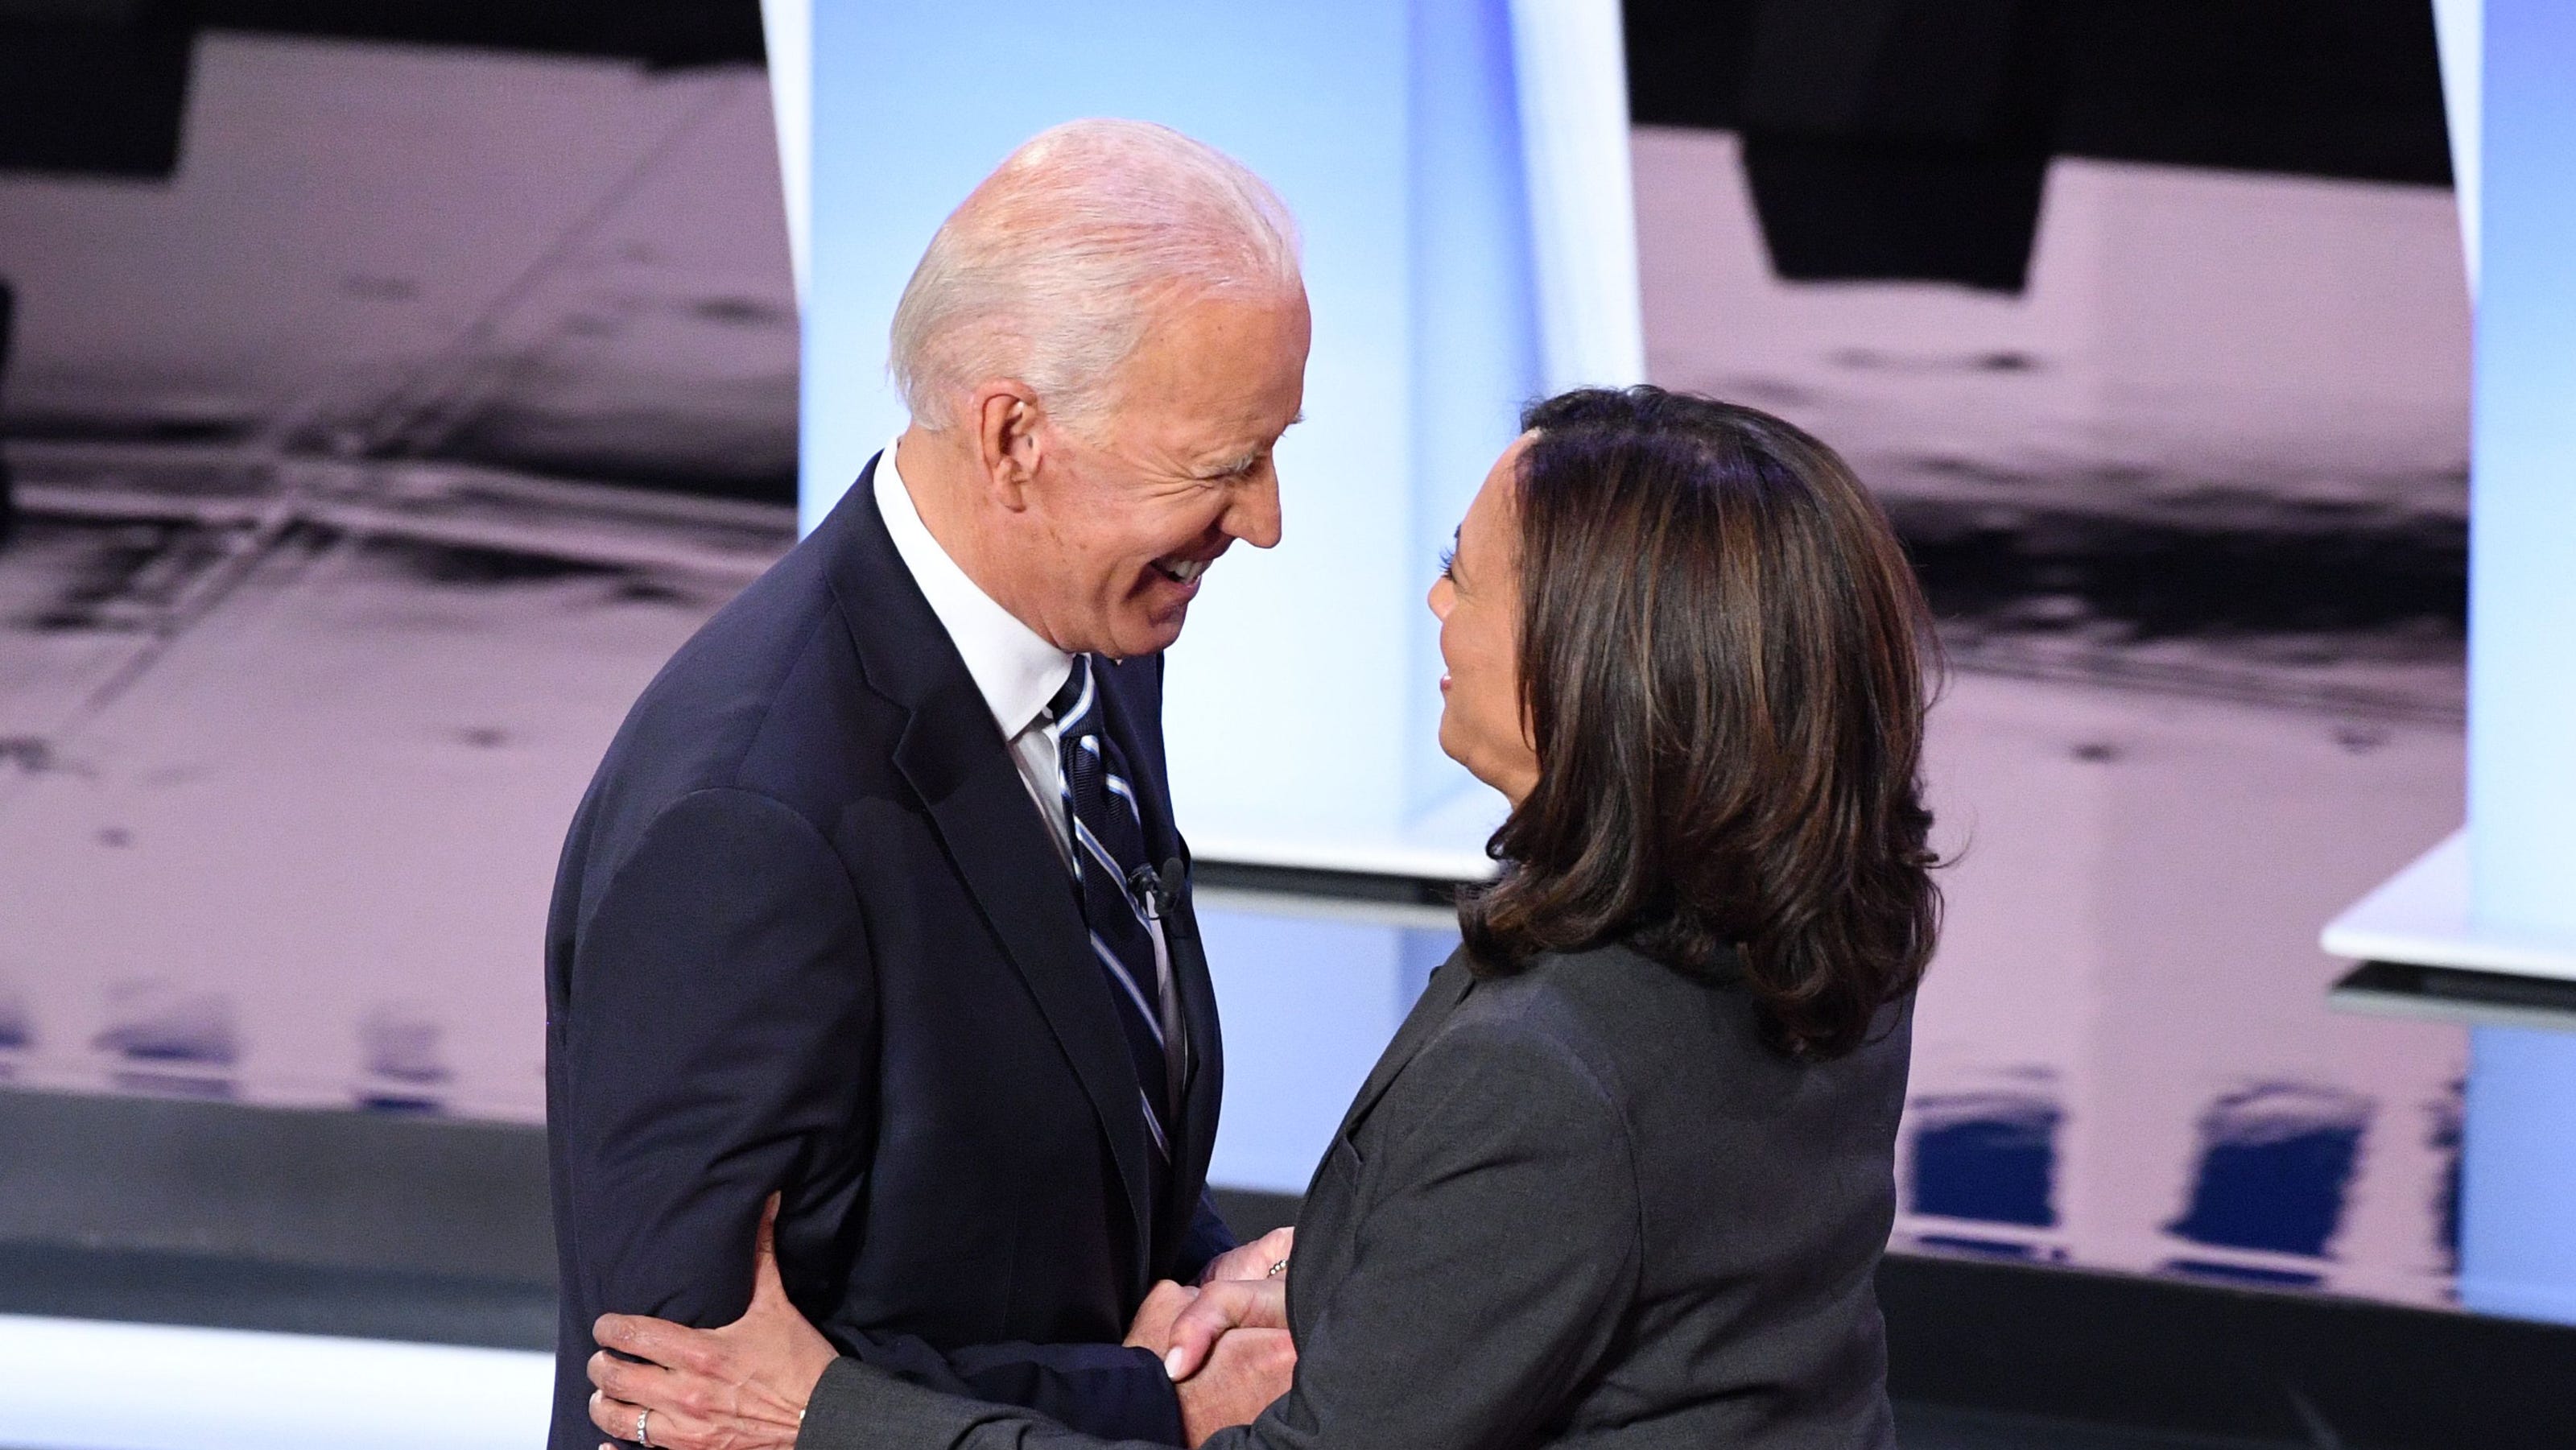 That's the ticket: Joe Biden picks Sen. Kamala Harris as his 2020 vice presidential running mate